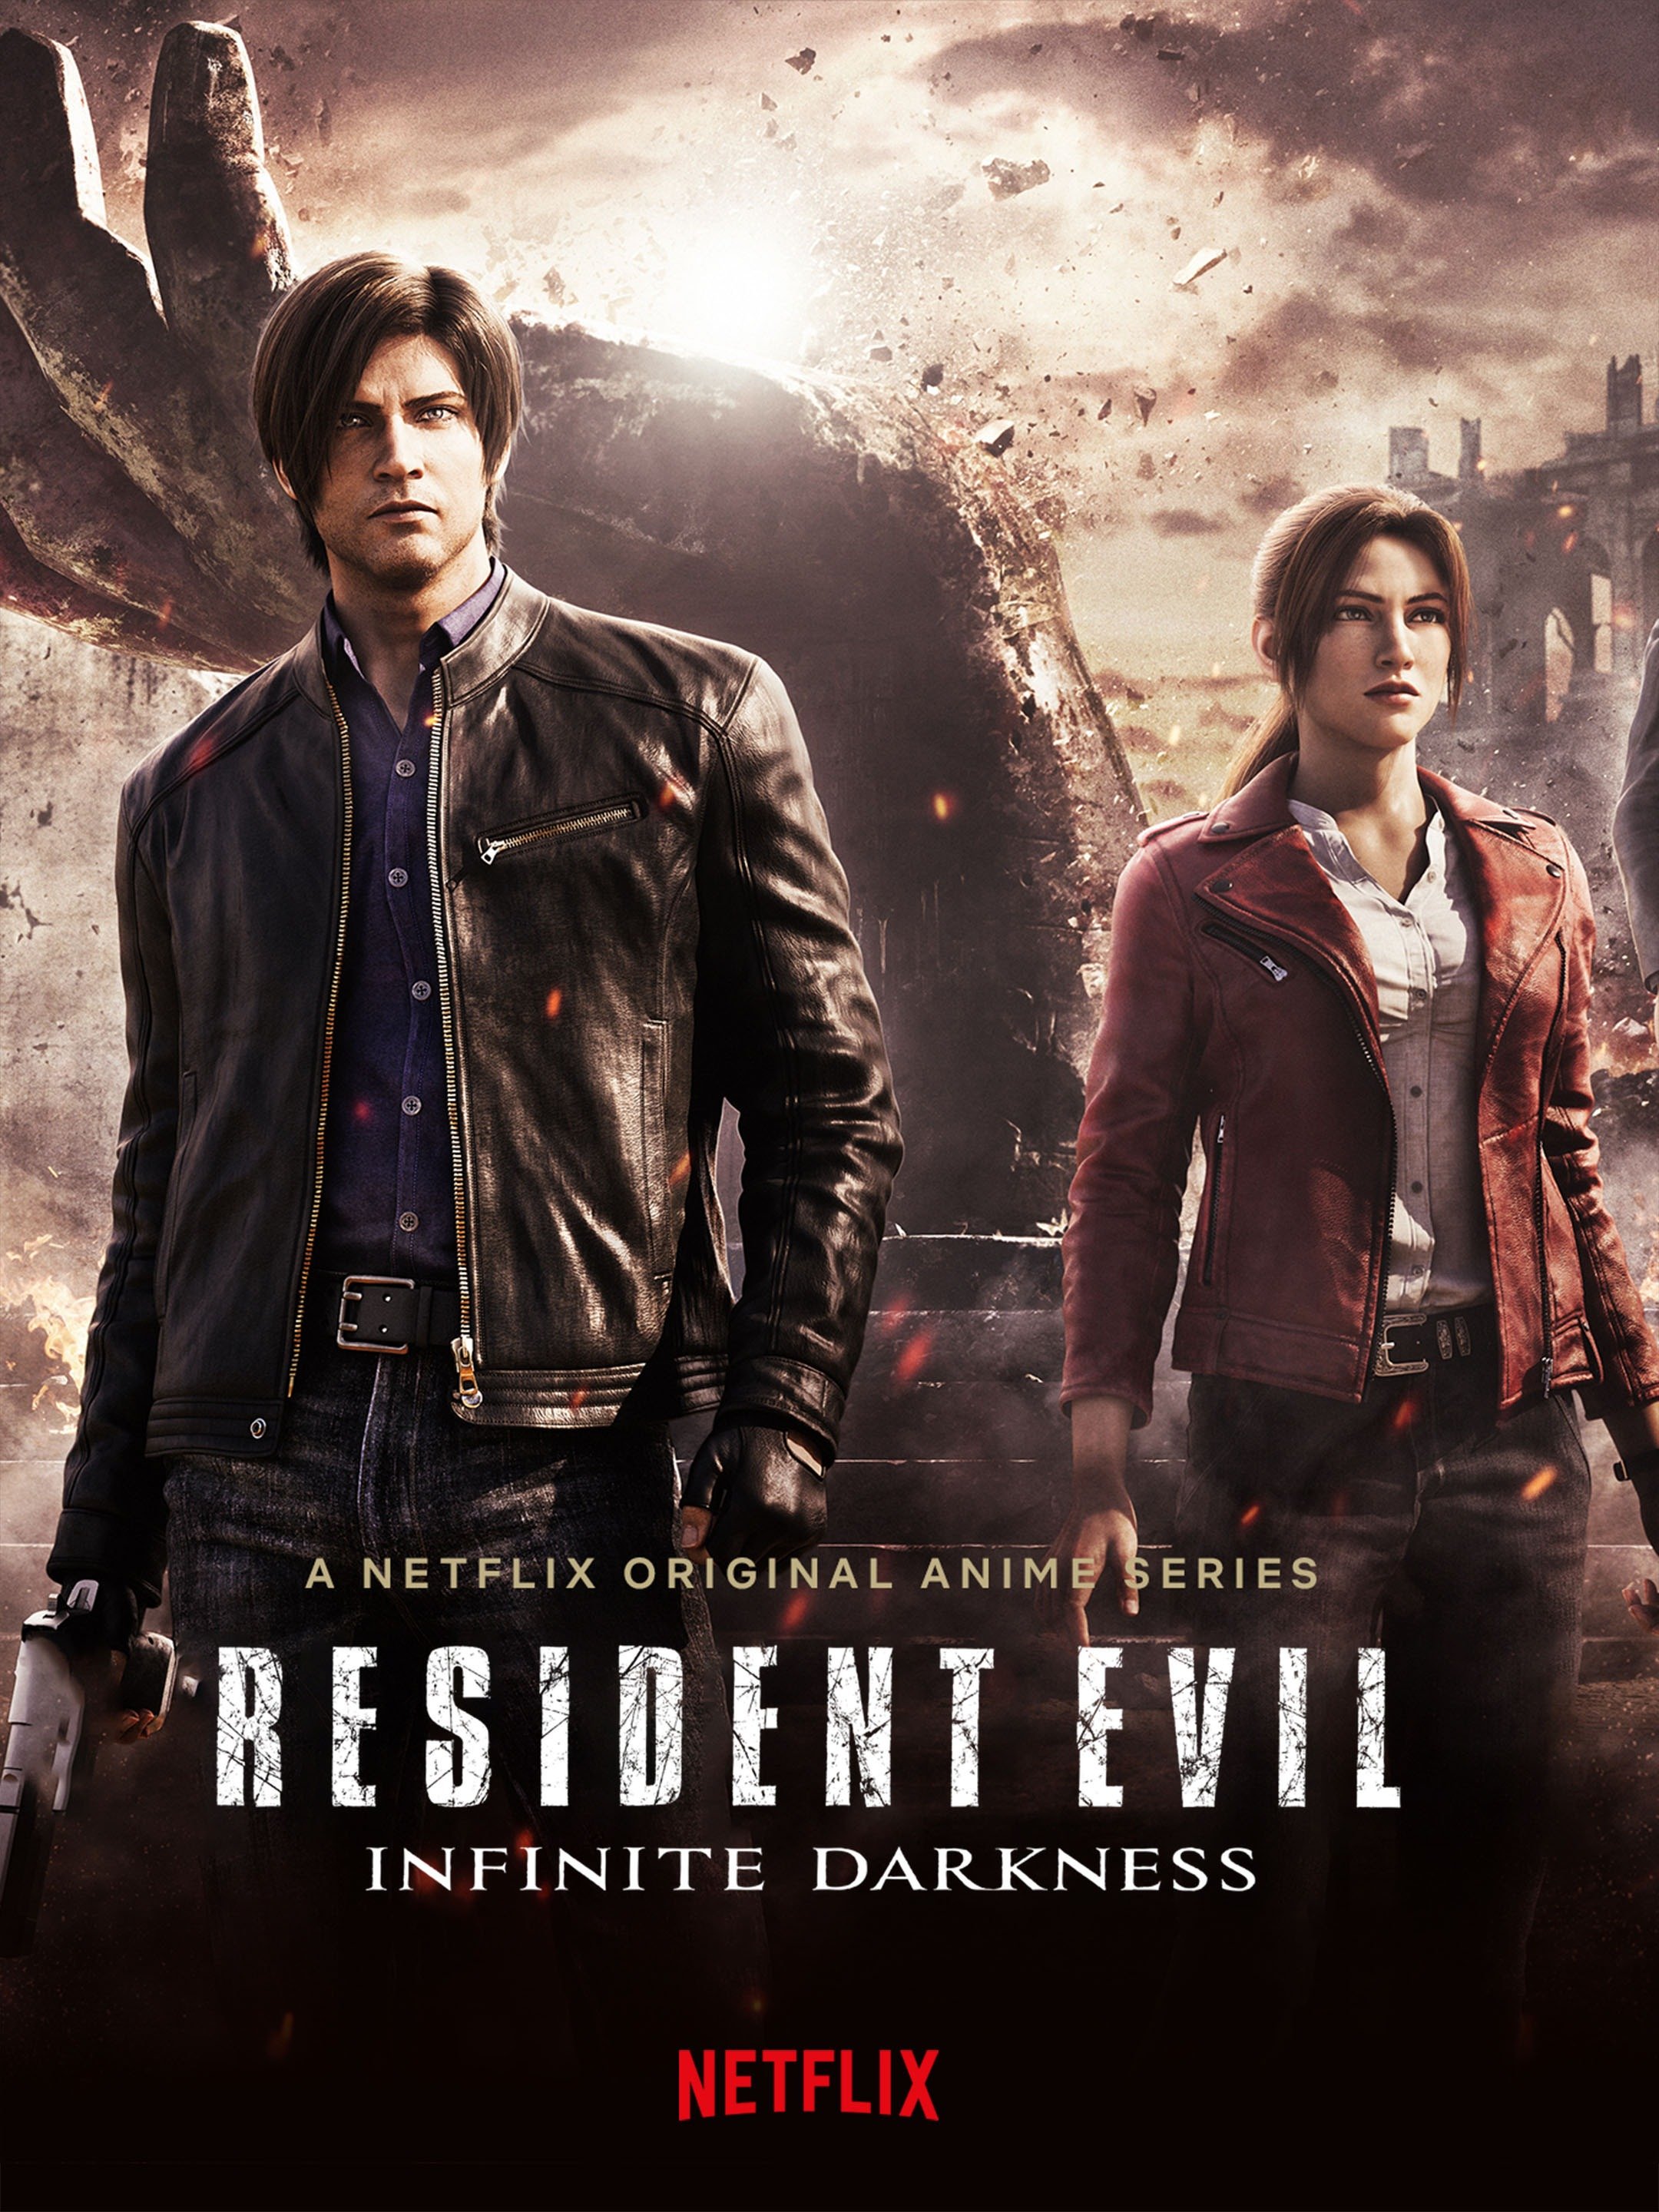 Resident Evil 2 Remake News - 'We Should Trust Him' says Kamiya